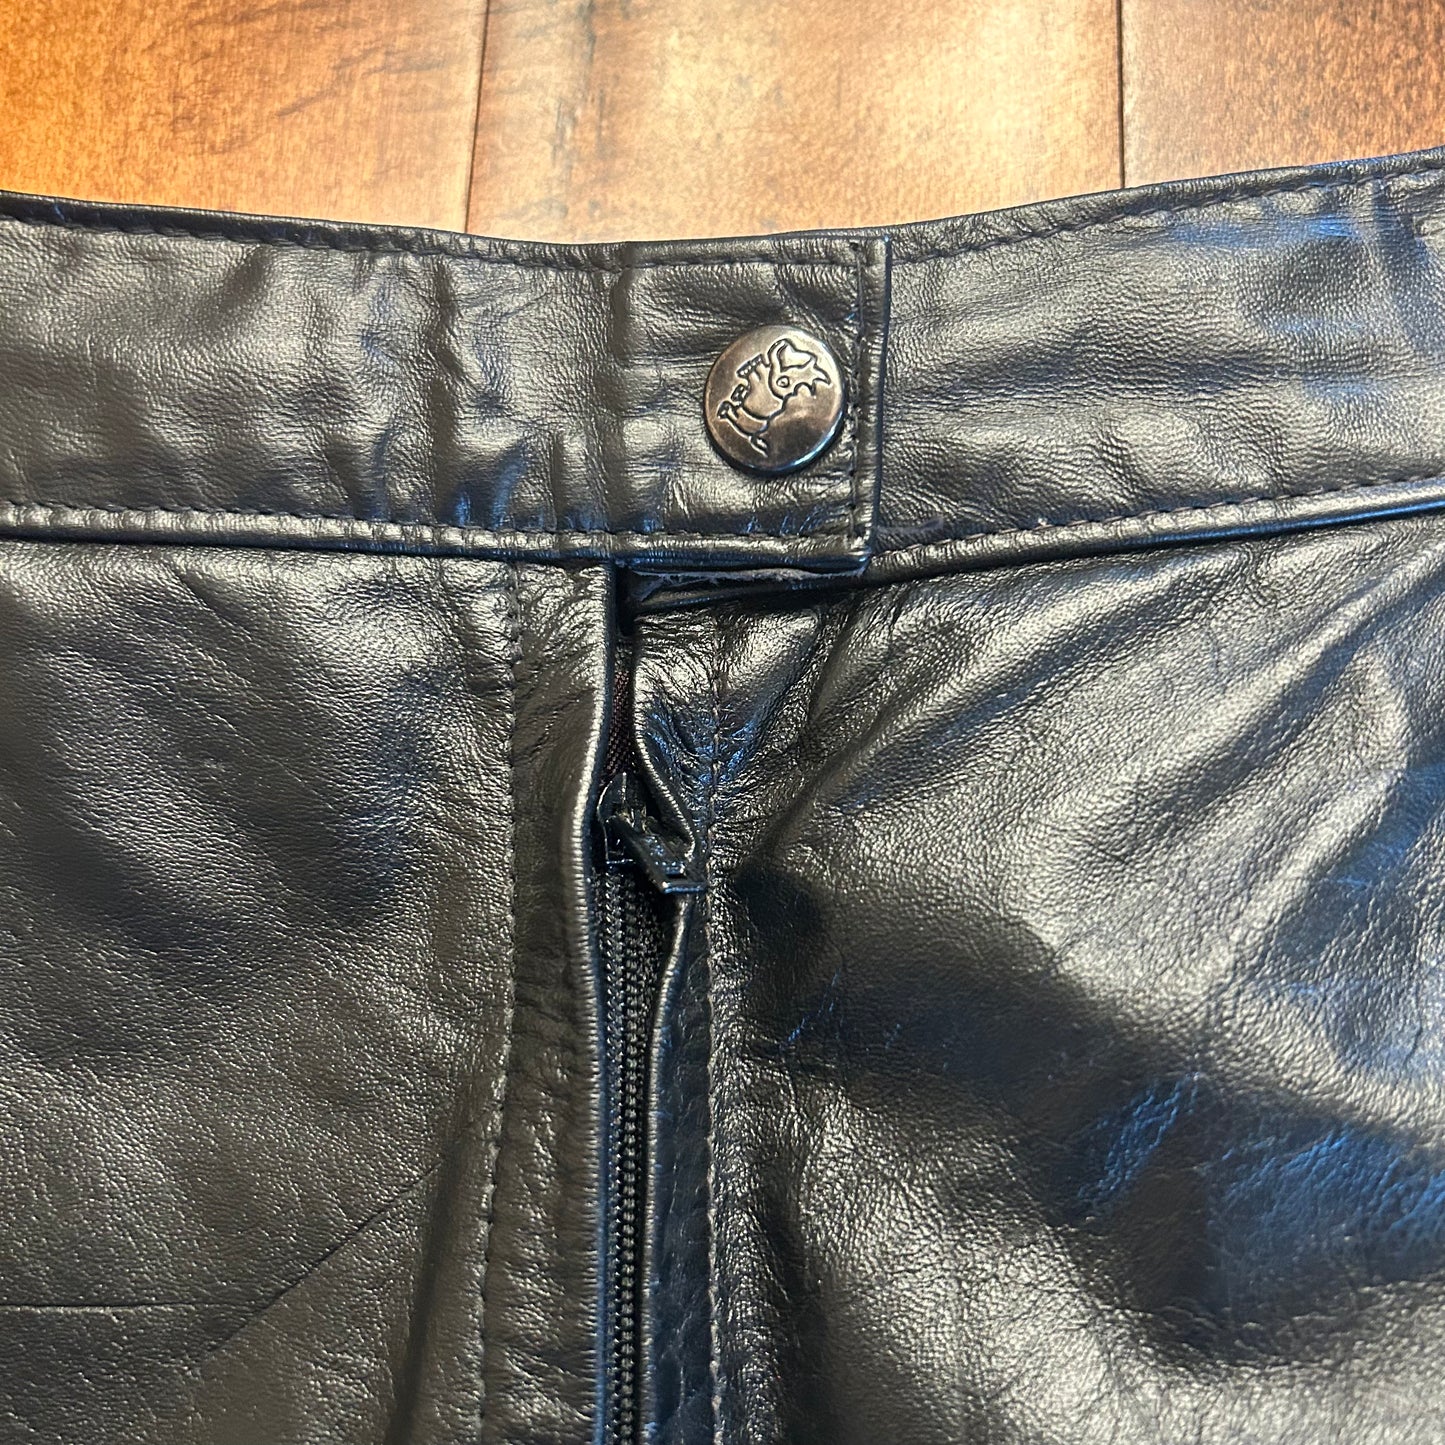 Black Genuine Leather Skirt Size S